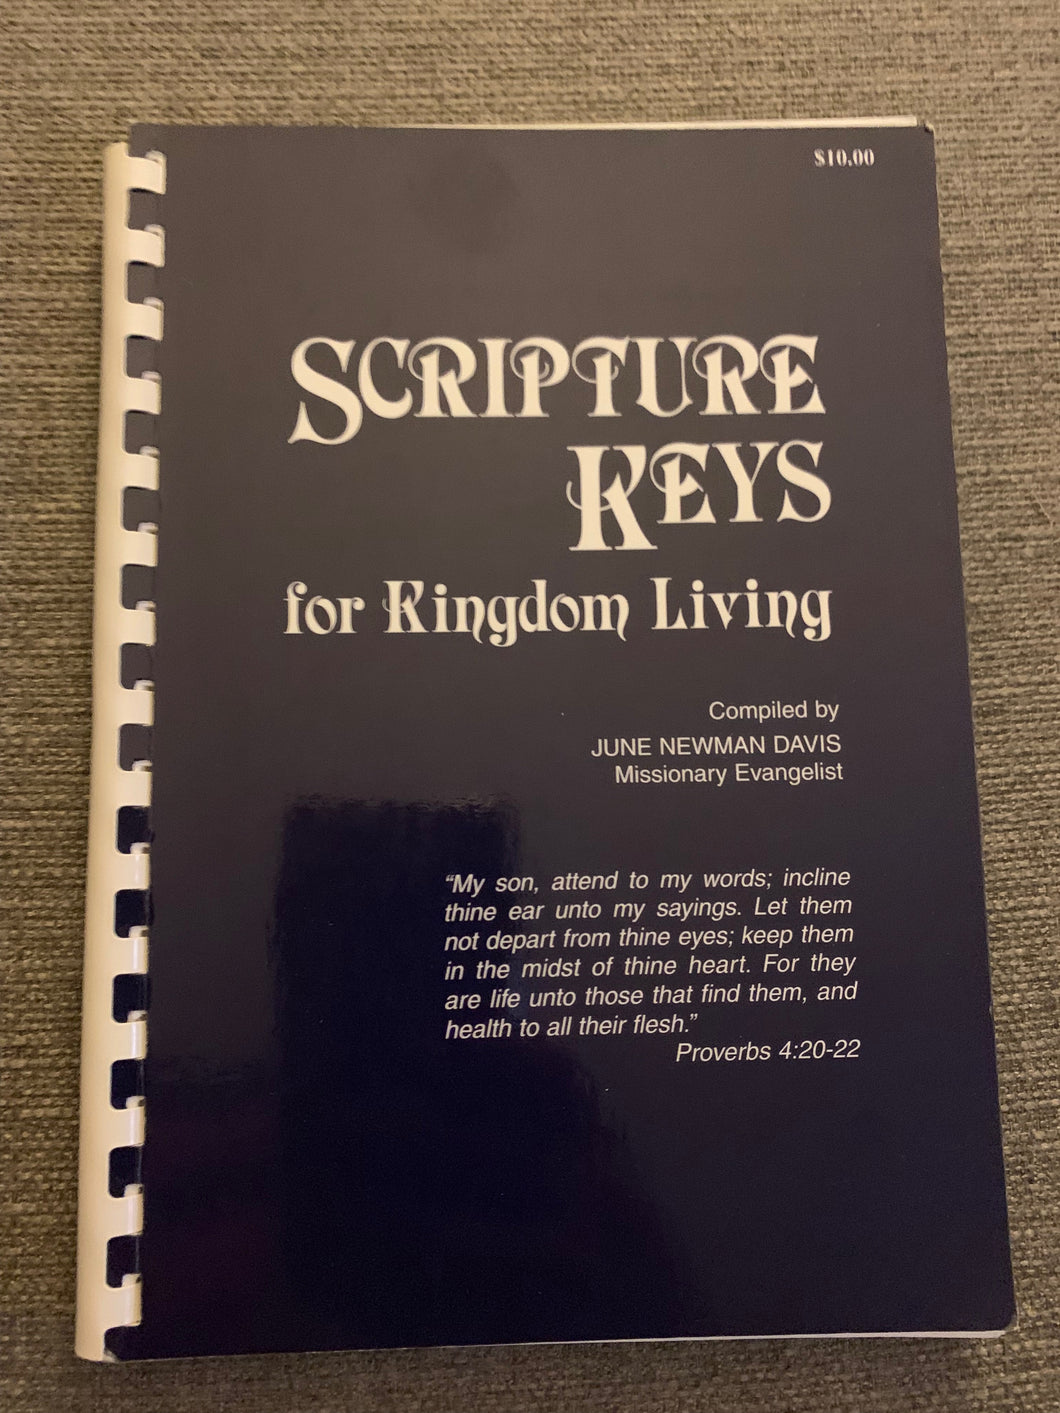 Scripture Keys for Kingdom Living by June Newman Davis